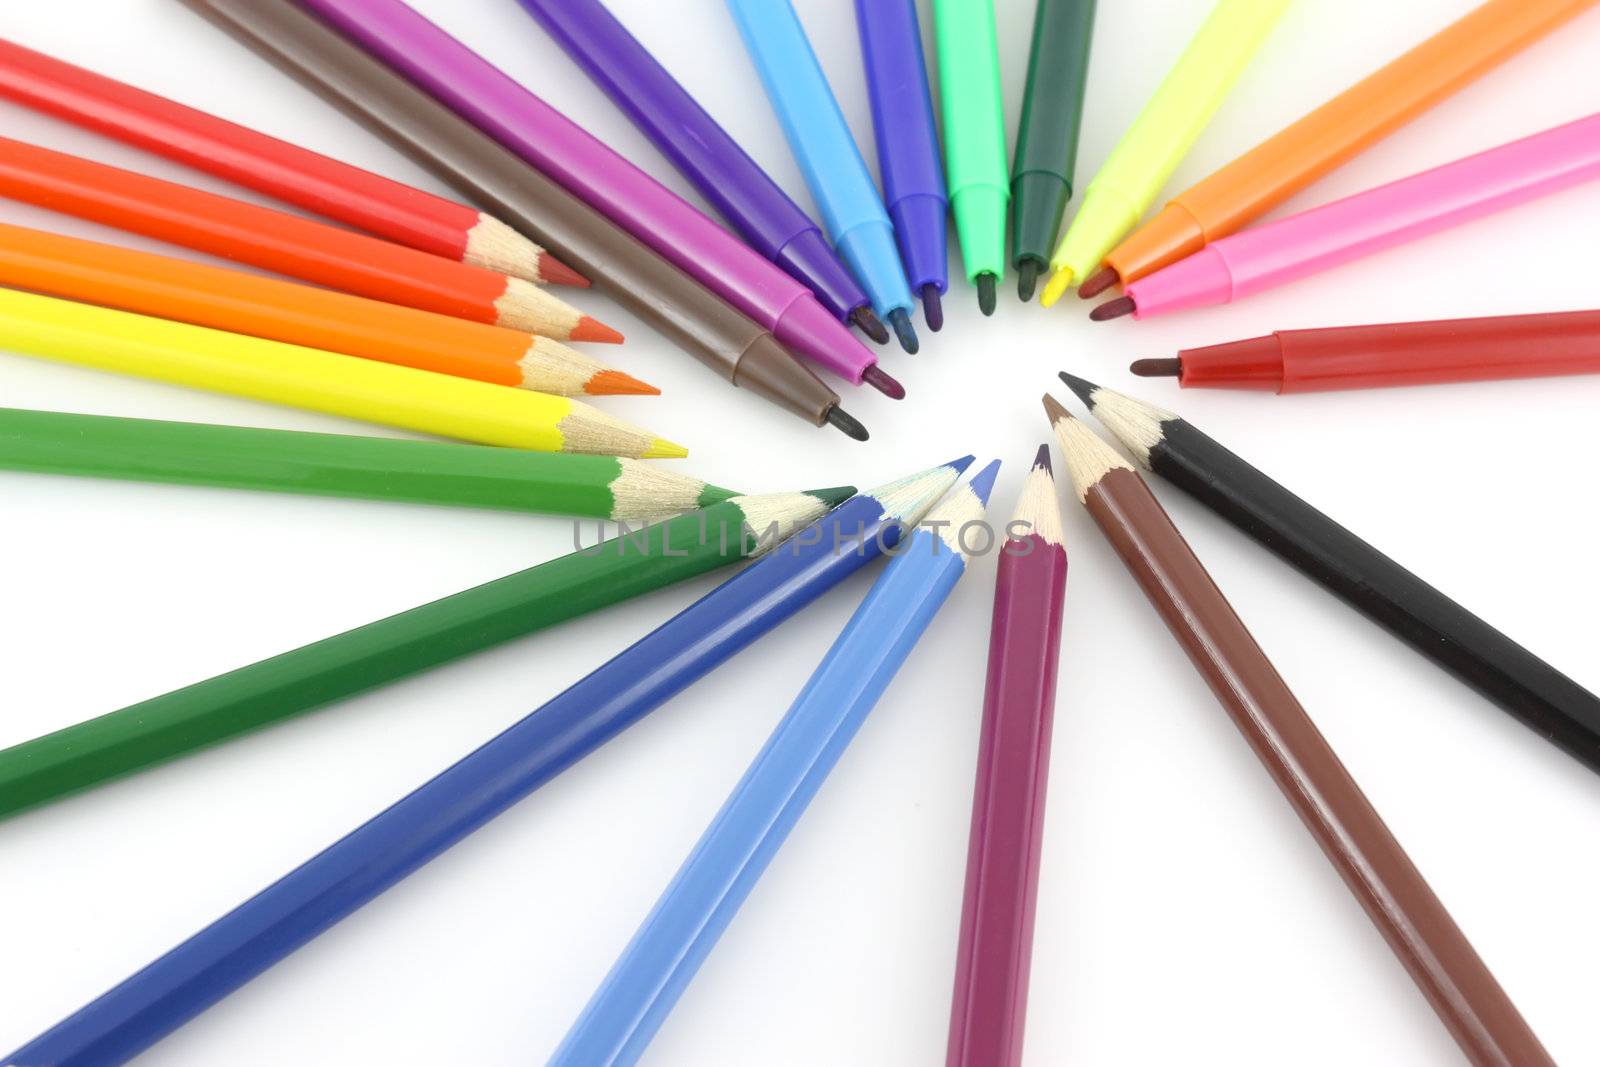 Color pencils and felt-tip pens by sergpet